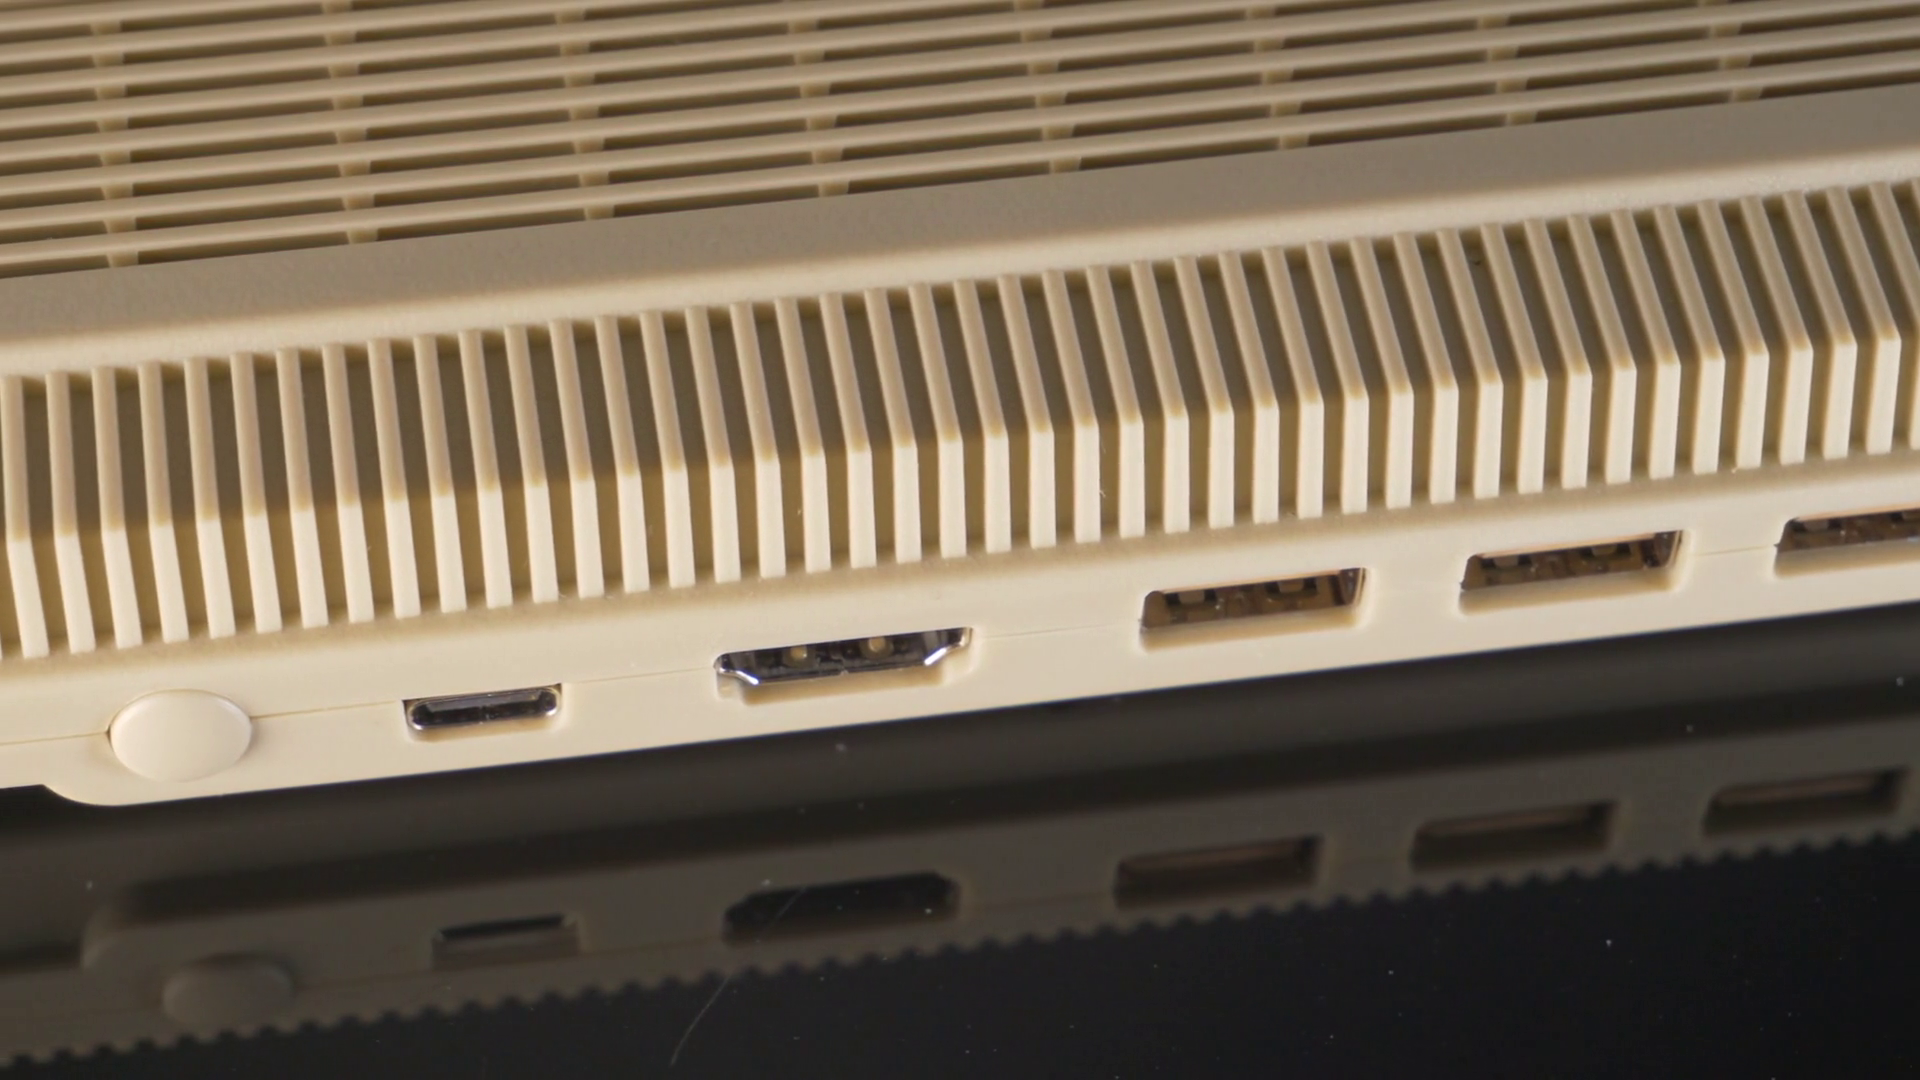 The A500 Mini shown here is a tiny version of the original Commodore Amiga 500.